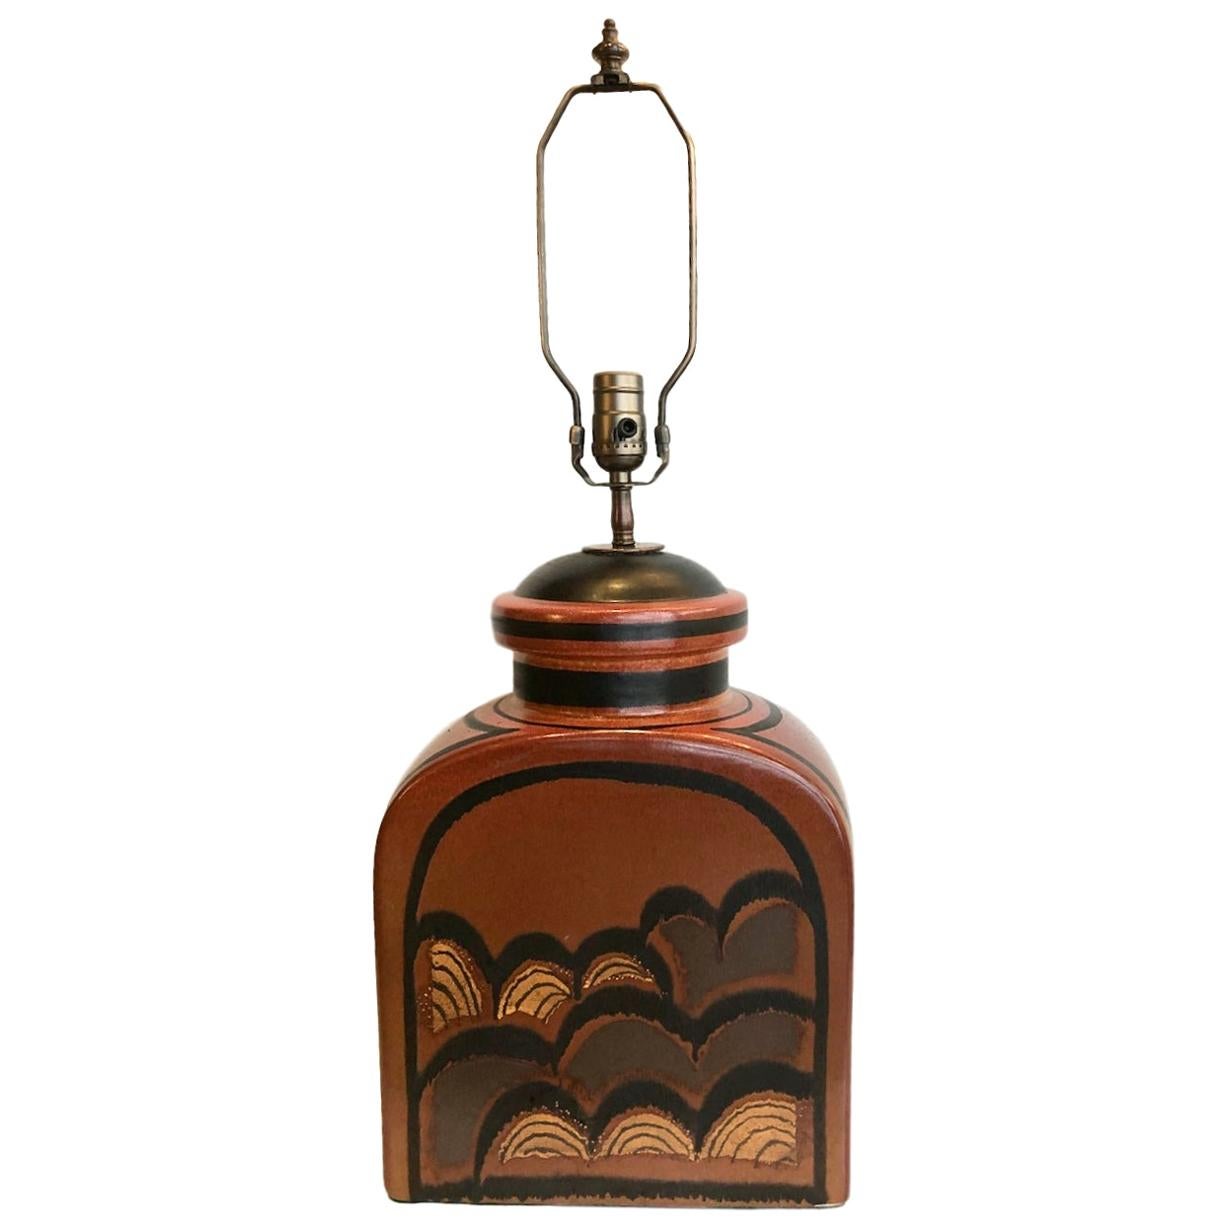 Single French Glazed Ceramic Table Lamp